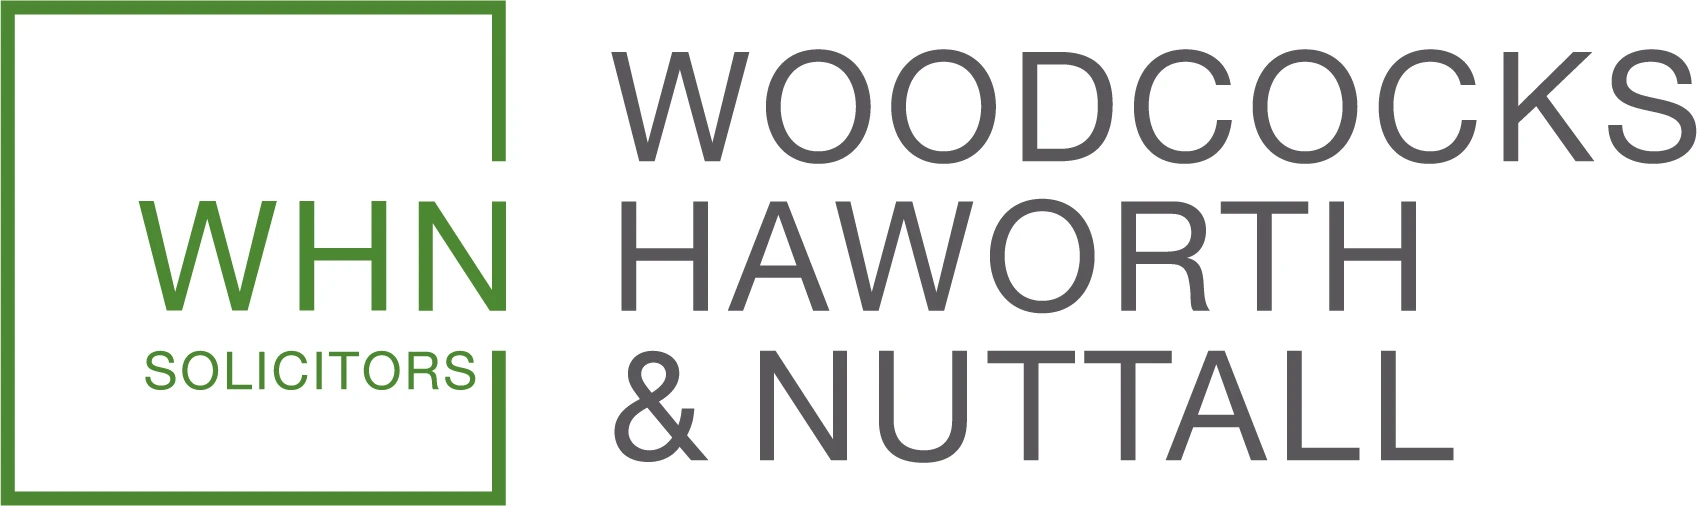 Woodcocks Haworth & Nuttall Solicitors Photo